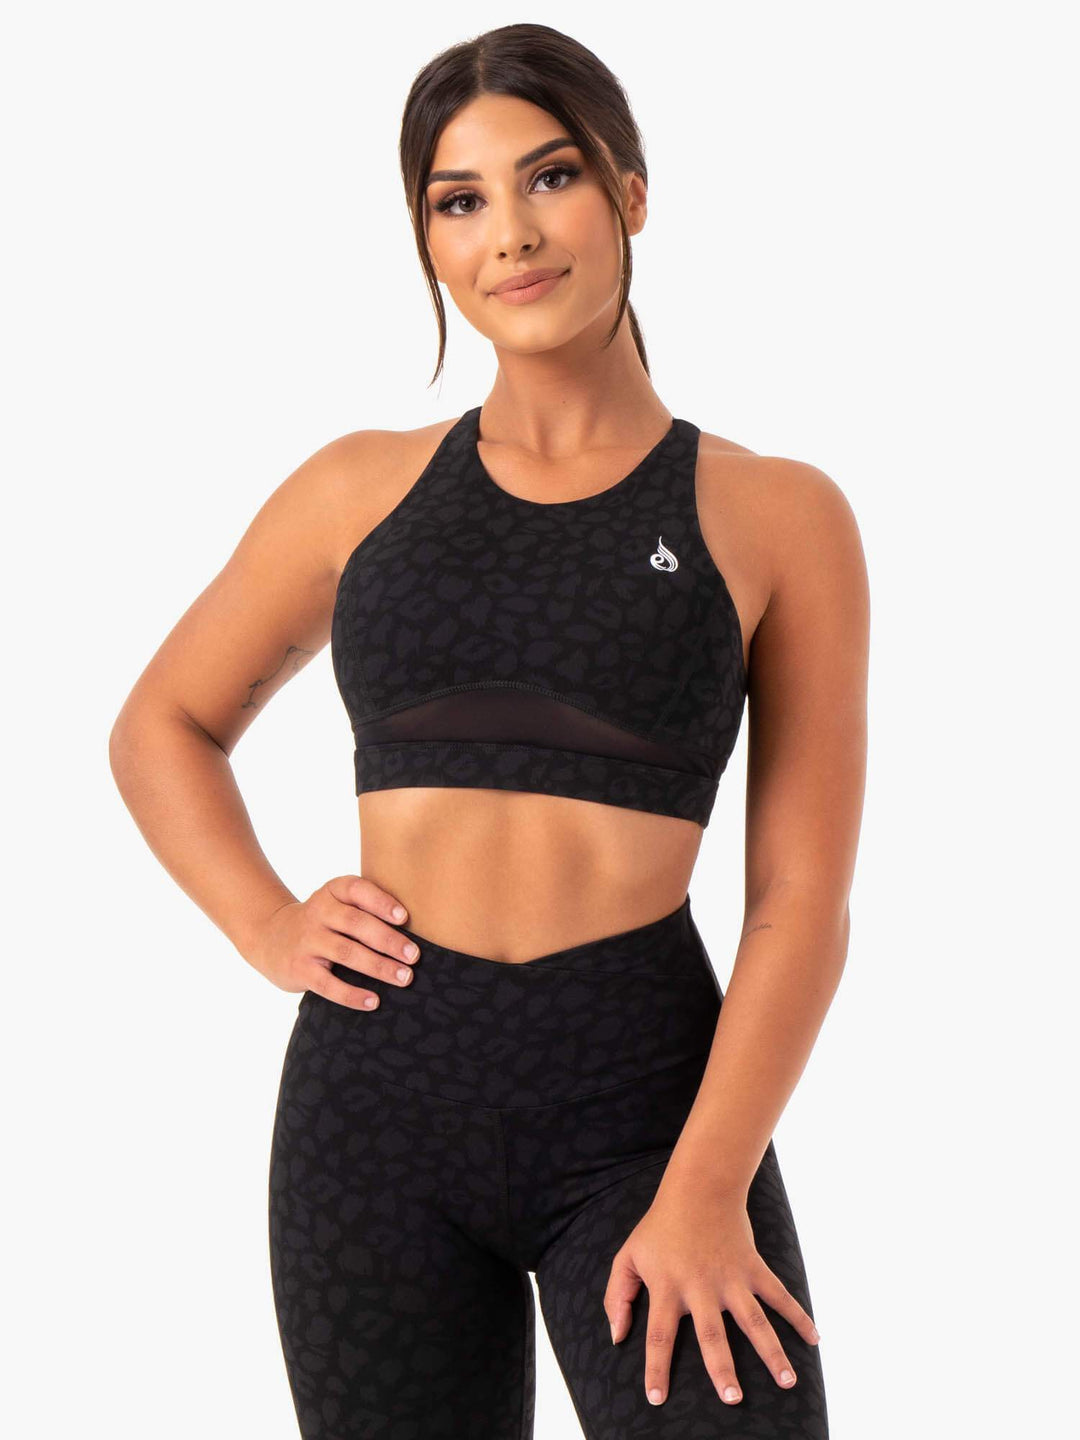 Amazon Mesh Sports Bra - Black Leopard Clothing Ryderwear 